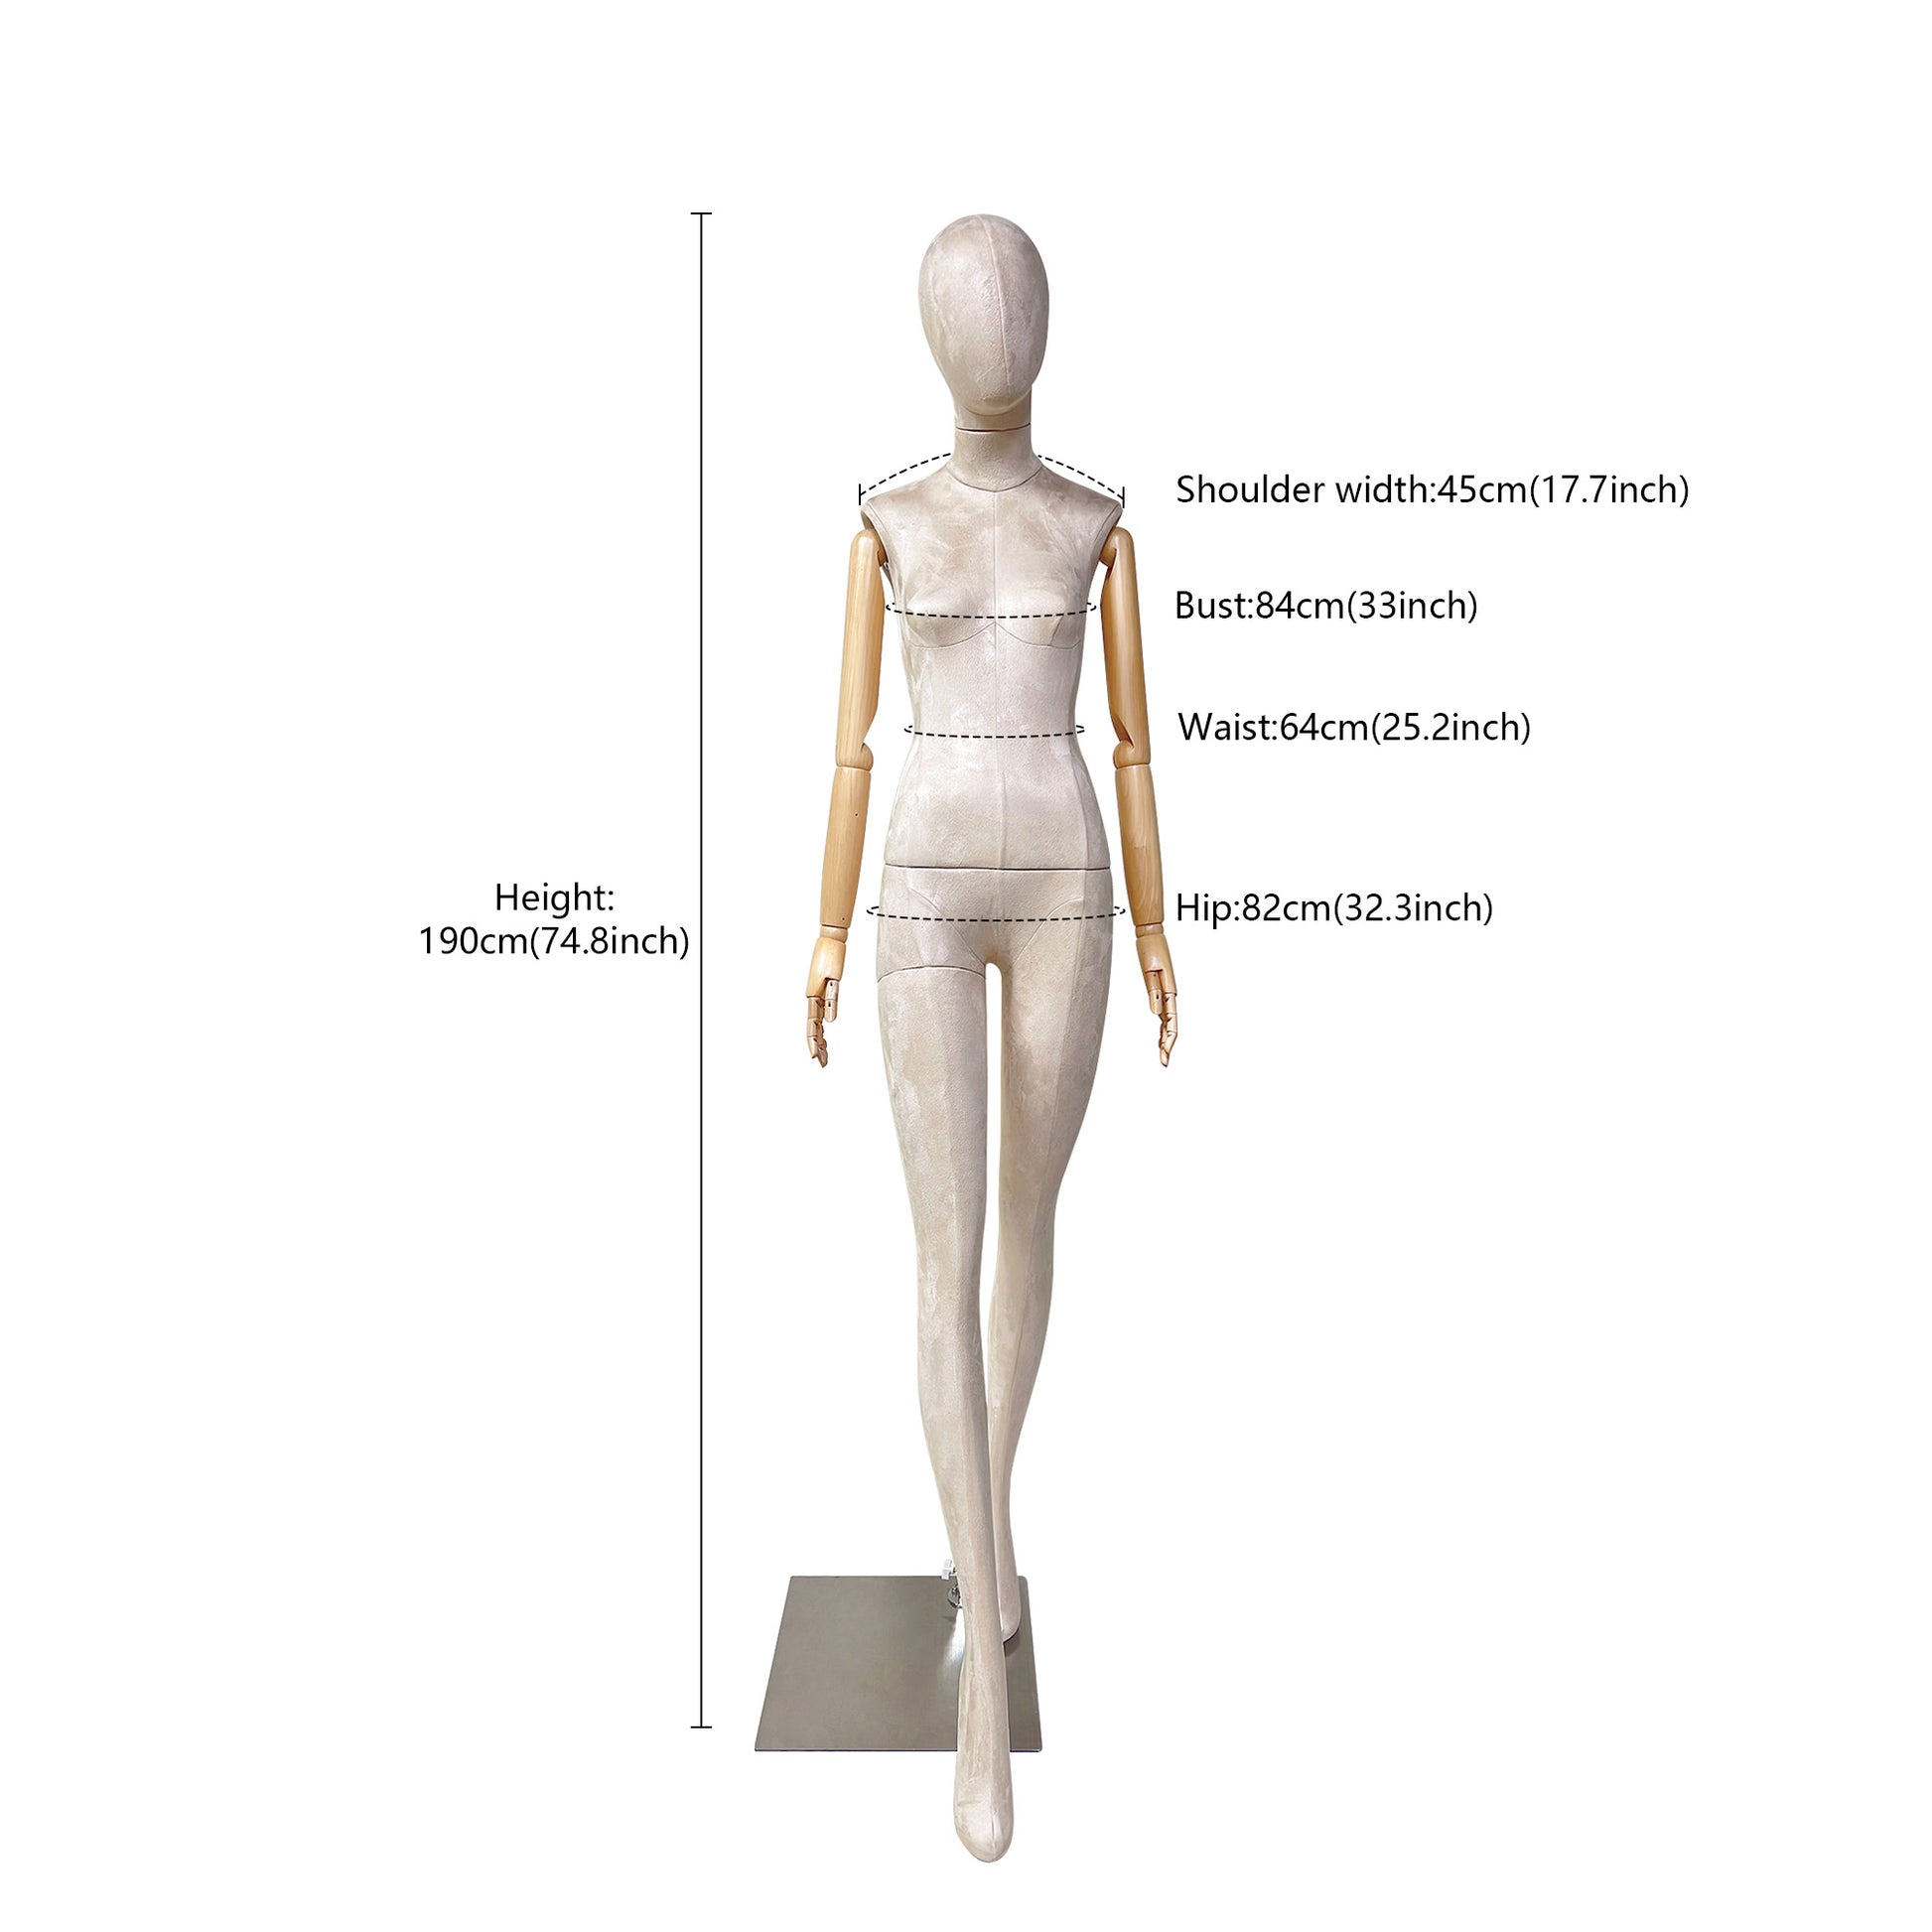 Luxury Adult Female Full Body Mannequin,Full Body Velvet Fabric Display Model Props,Women Flat Shoulder Dress Form Torso for Clothing Store De-Liang Dress Forms